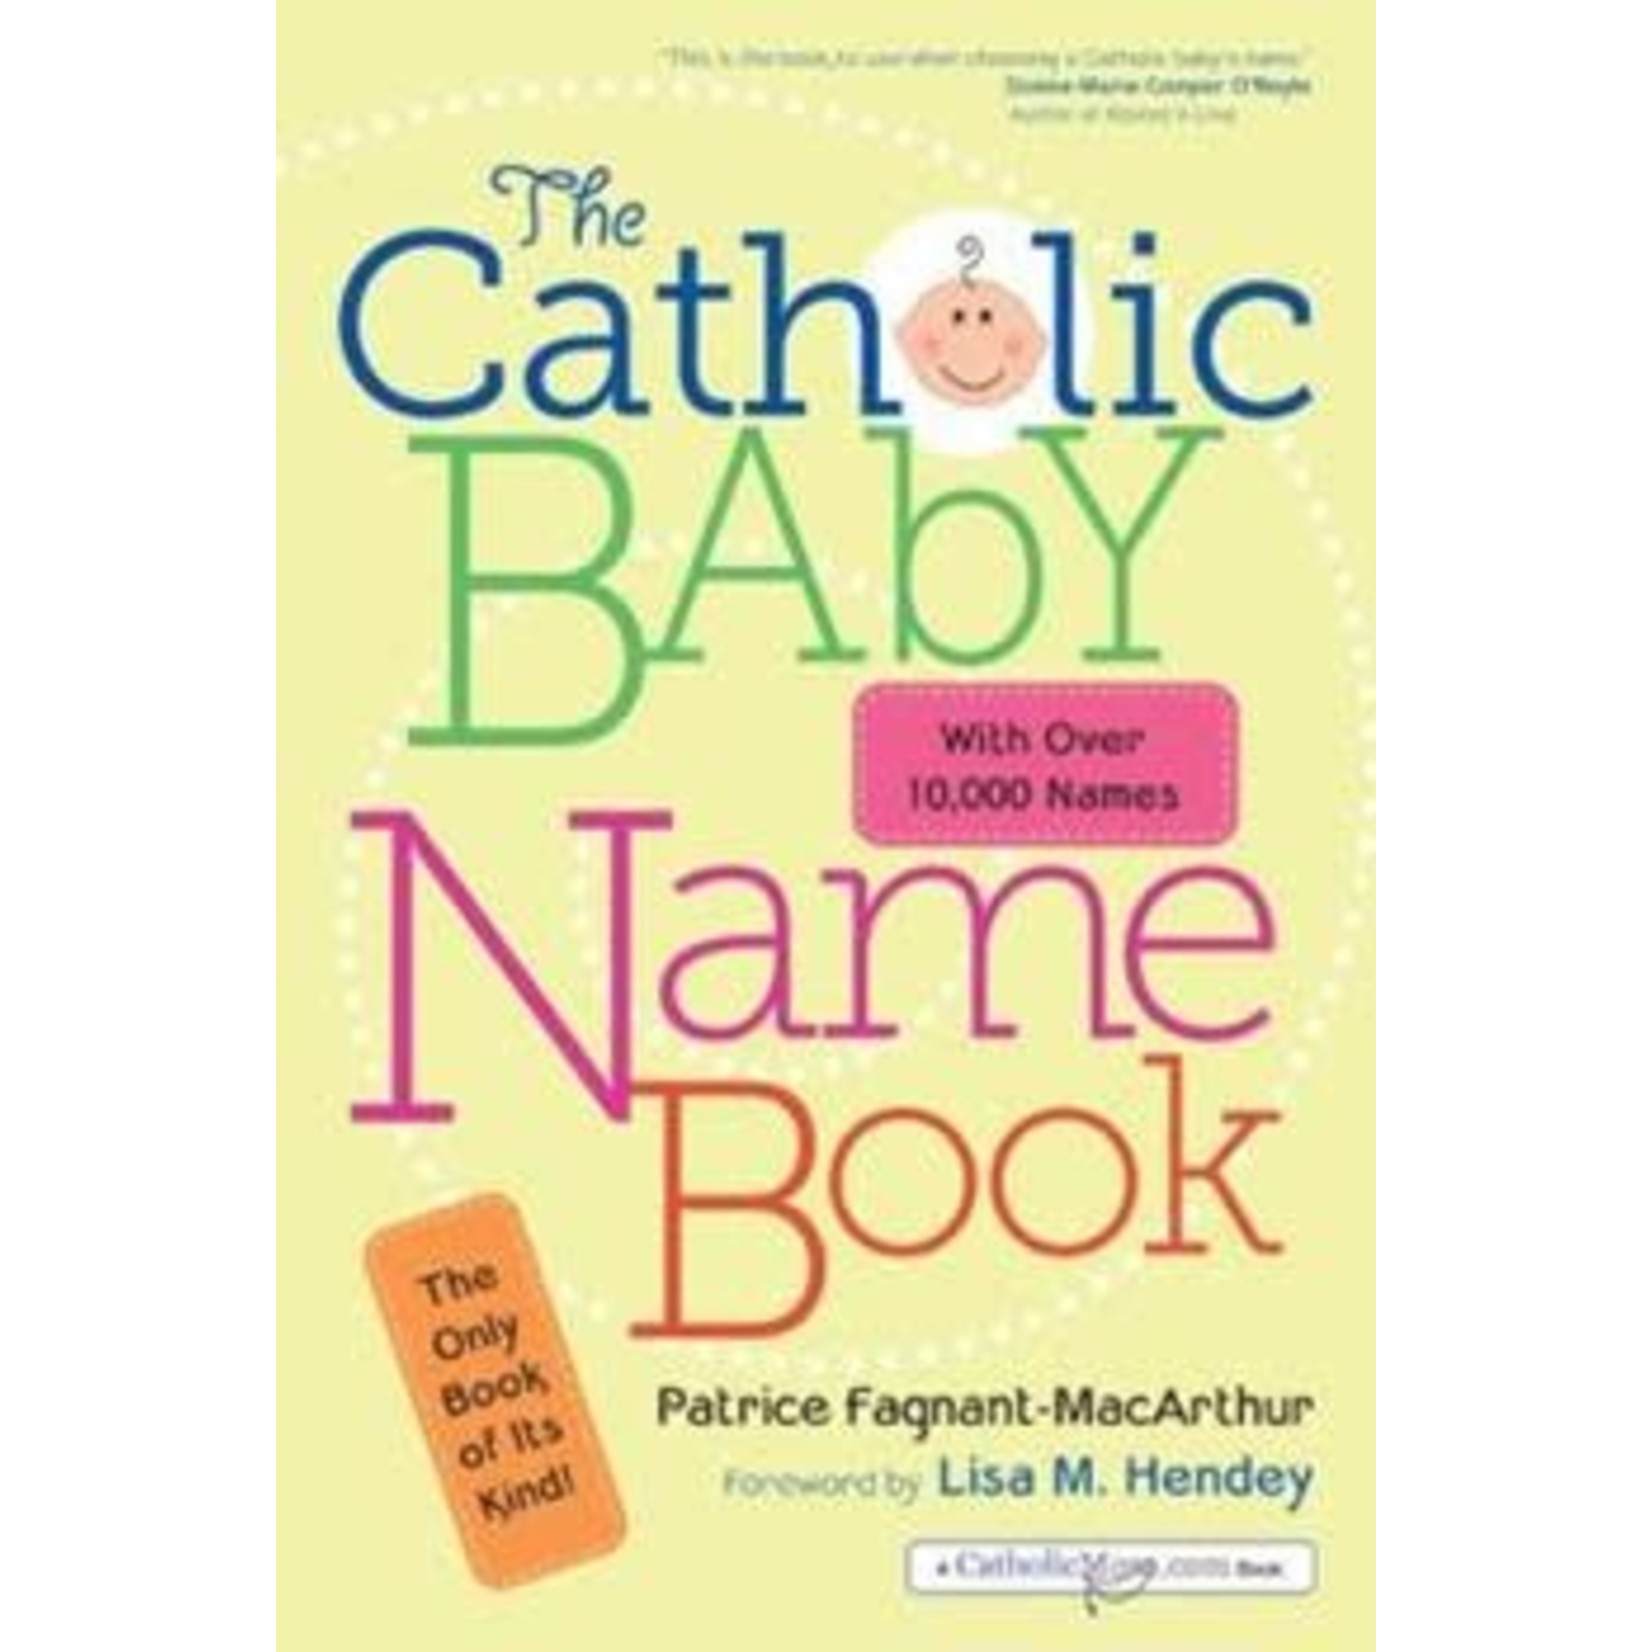 The Catholic Baby Name Book